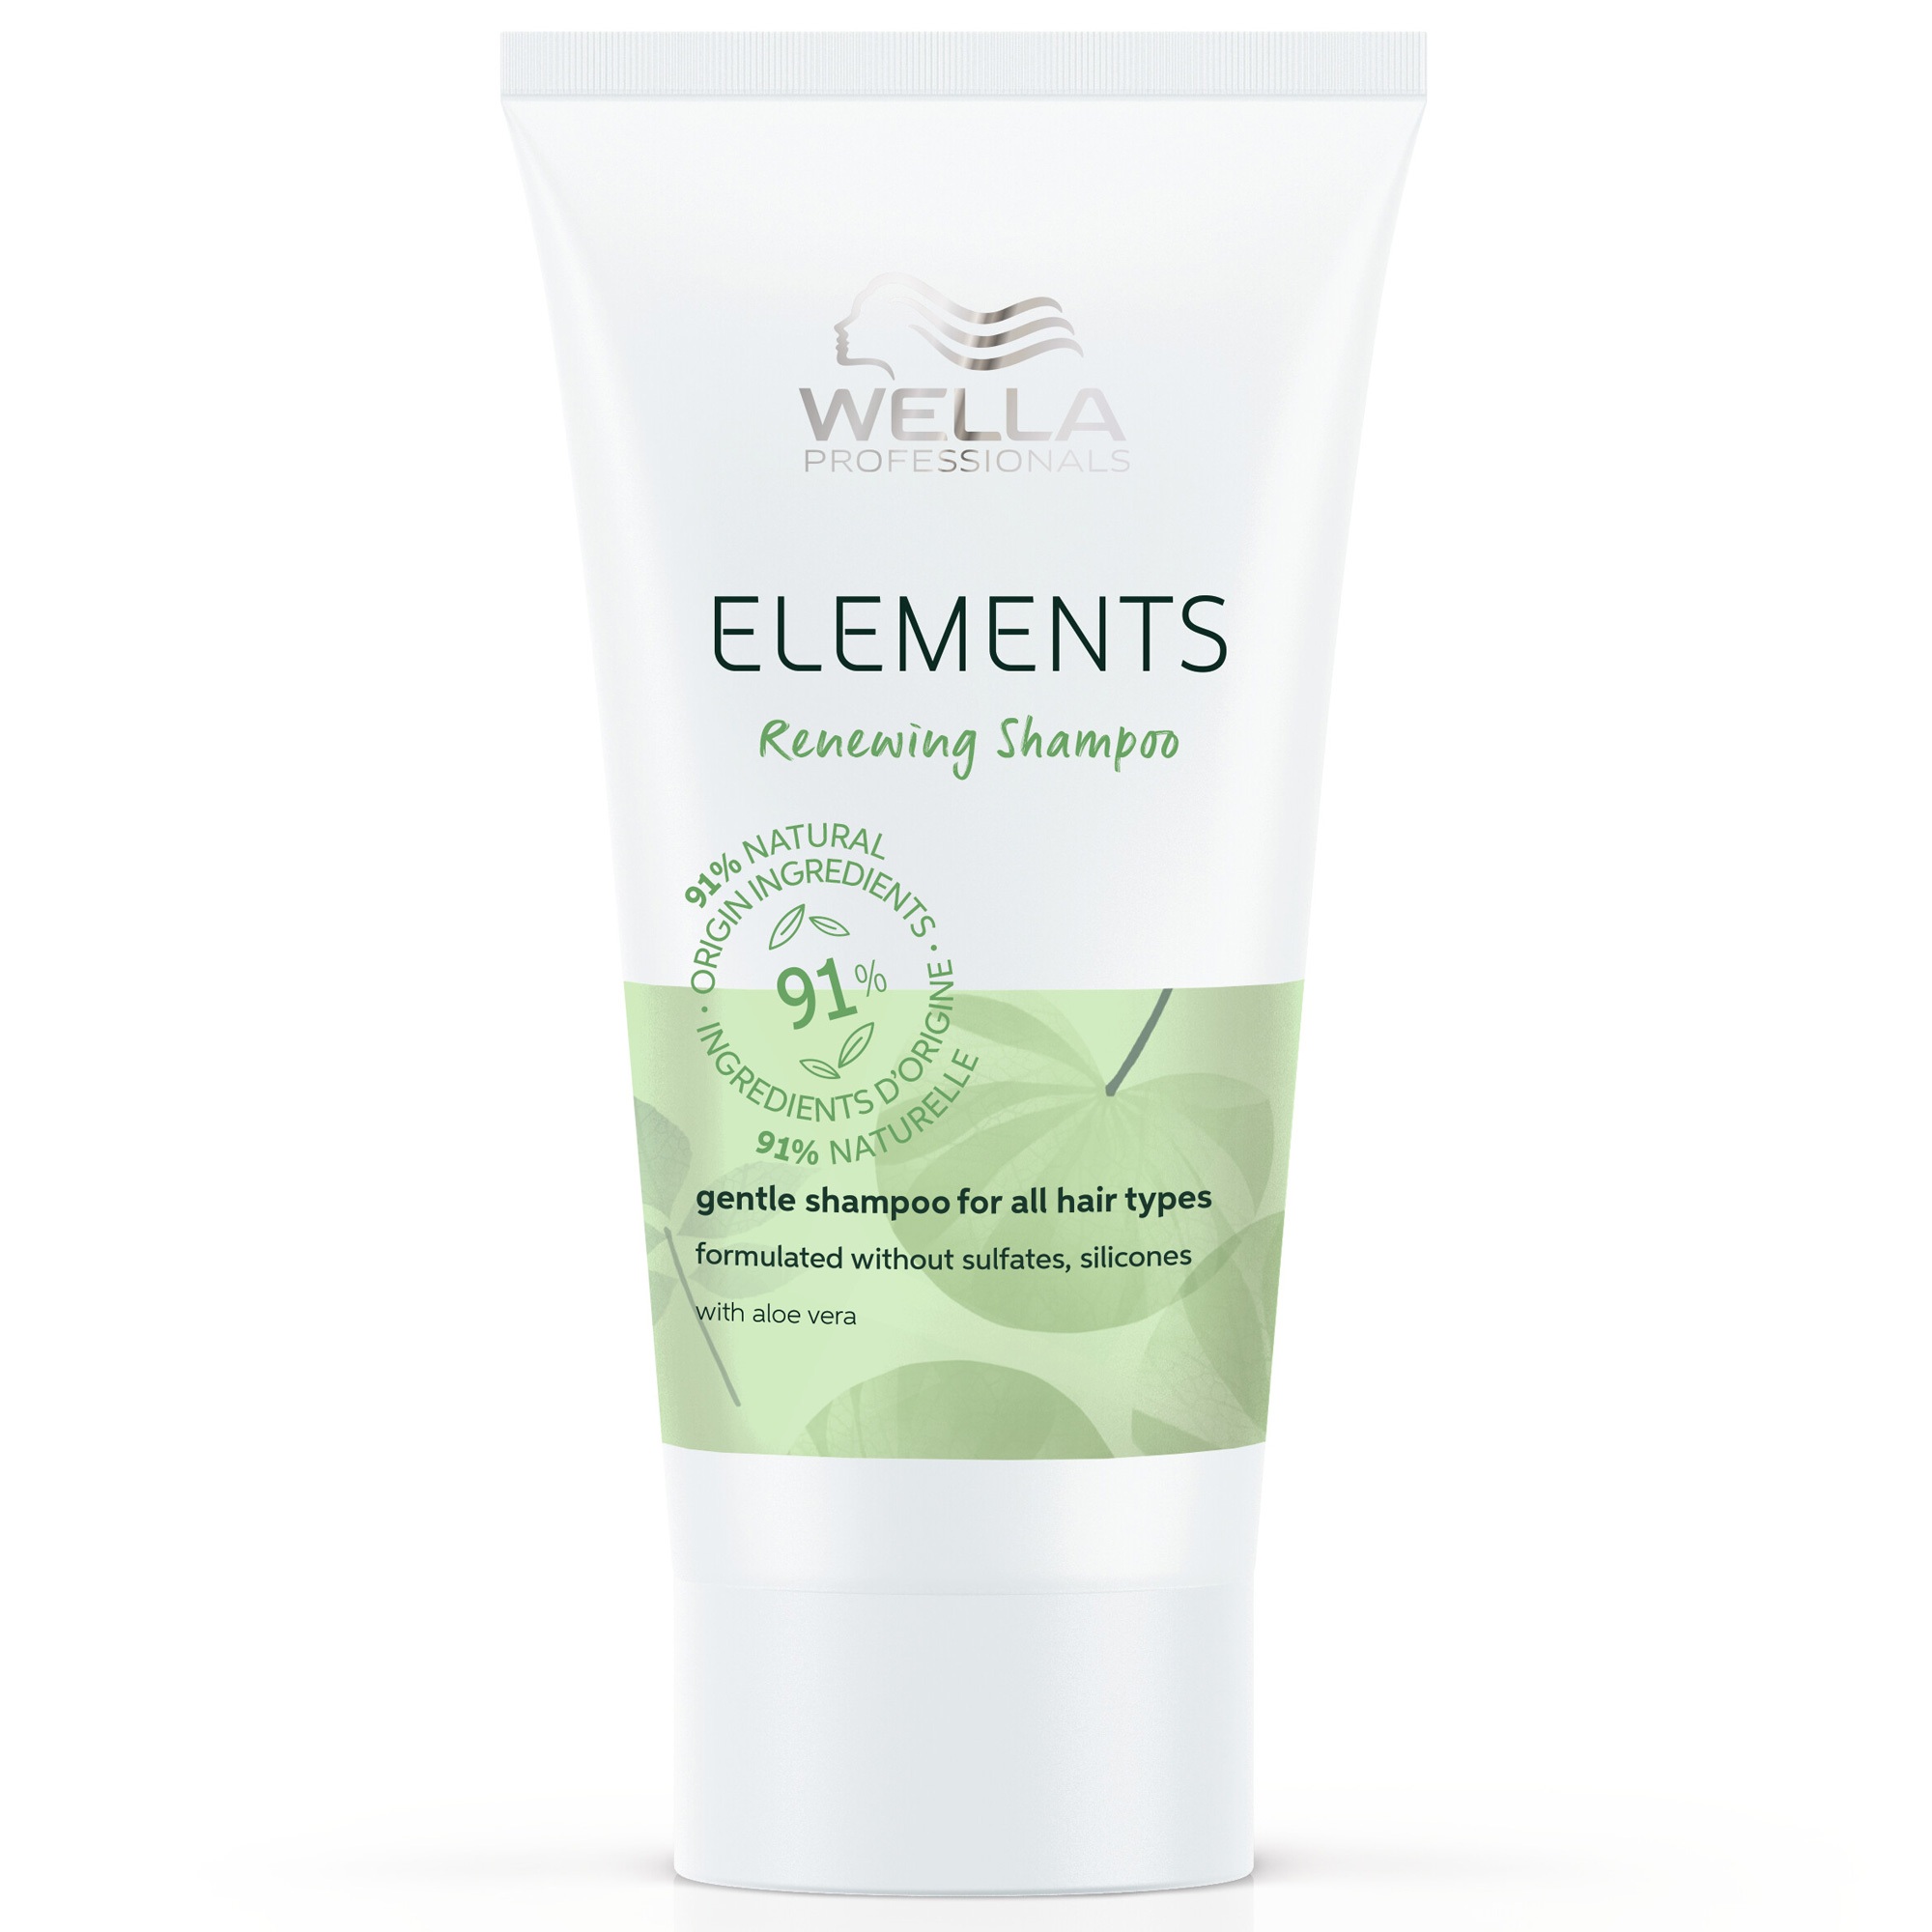 Wella Elements Renewing Shampoo 1.01oz